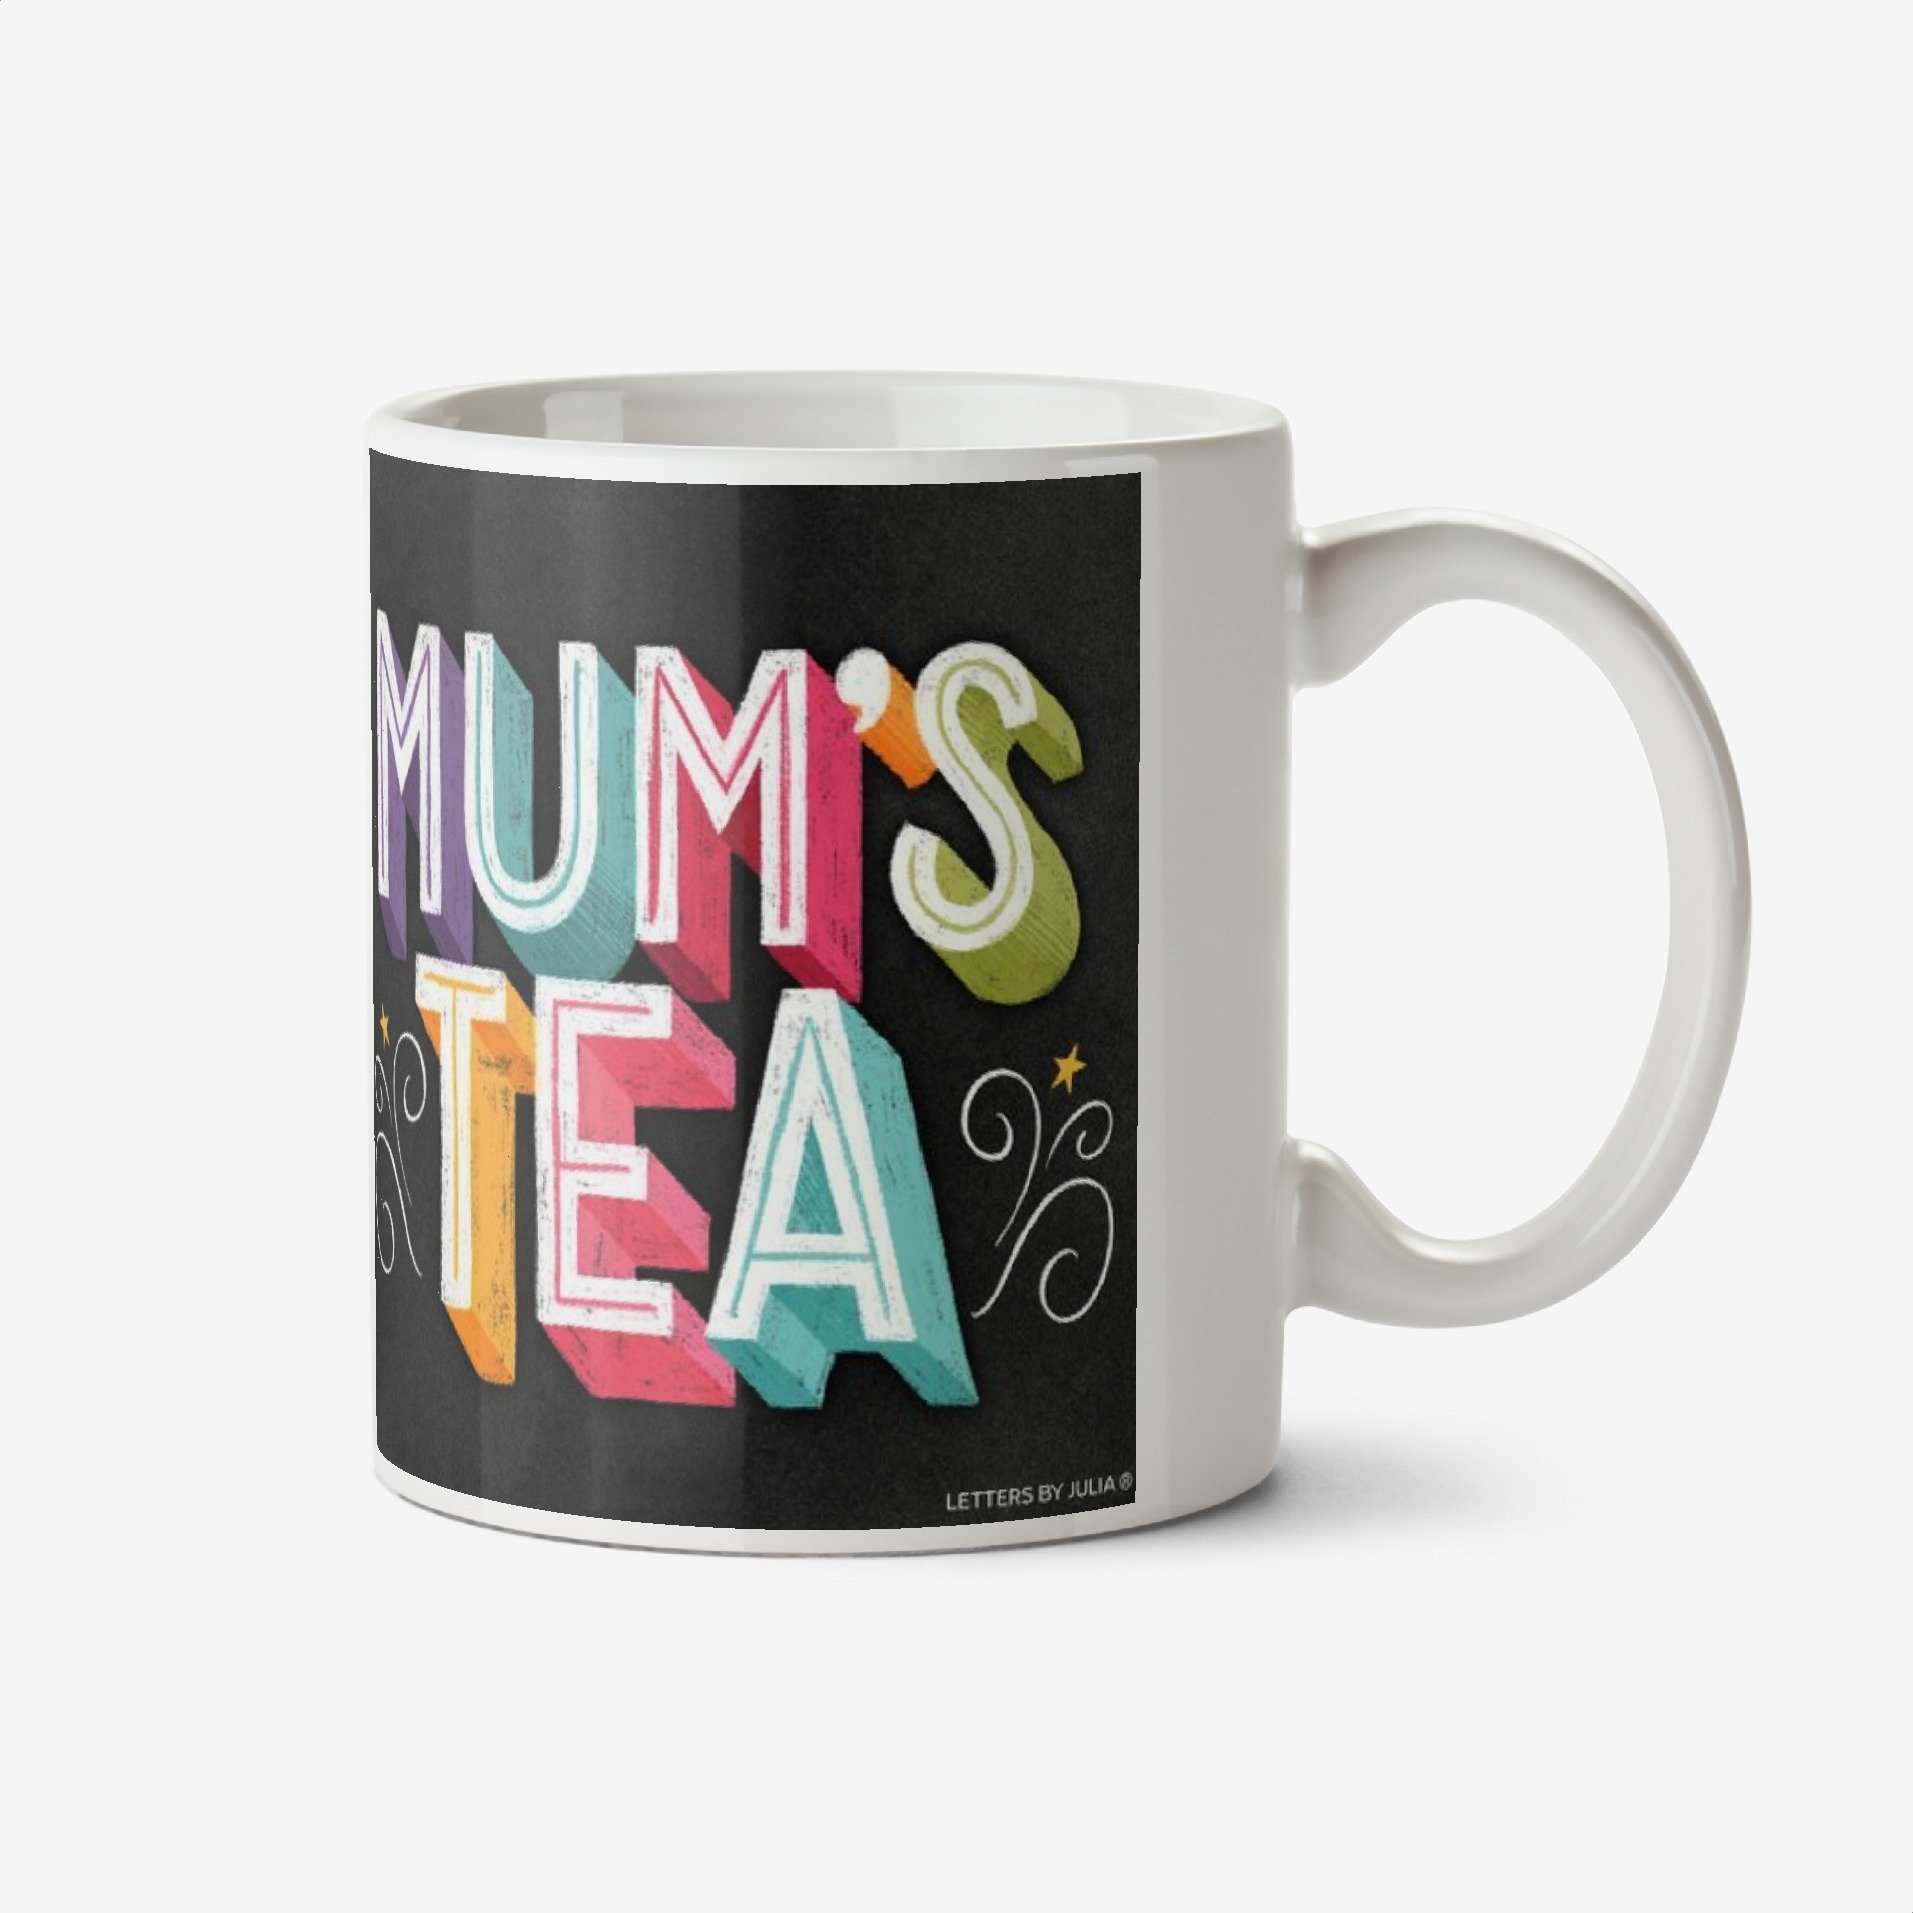 Moonpig Mums Tea Chalkboard Chalk Lettering Typographic Mug Ceramic Mug